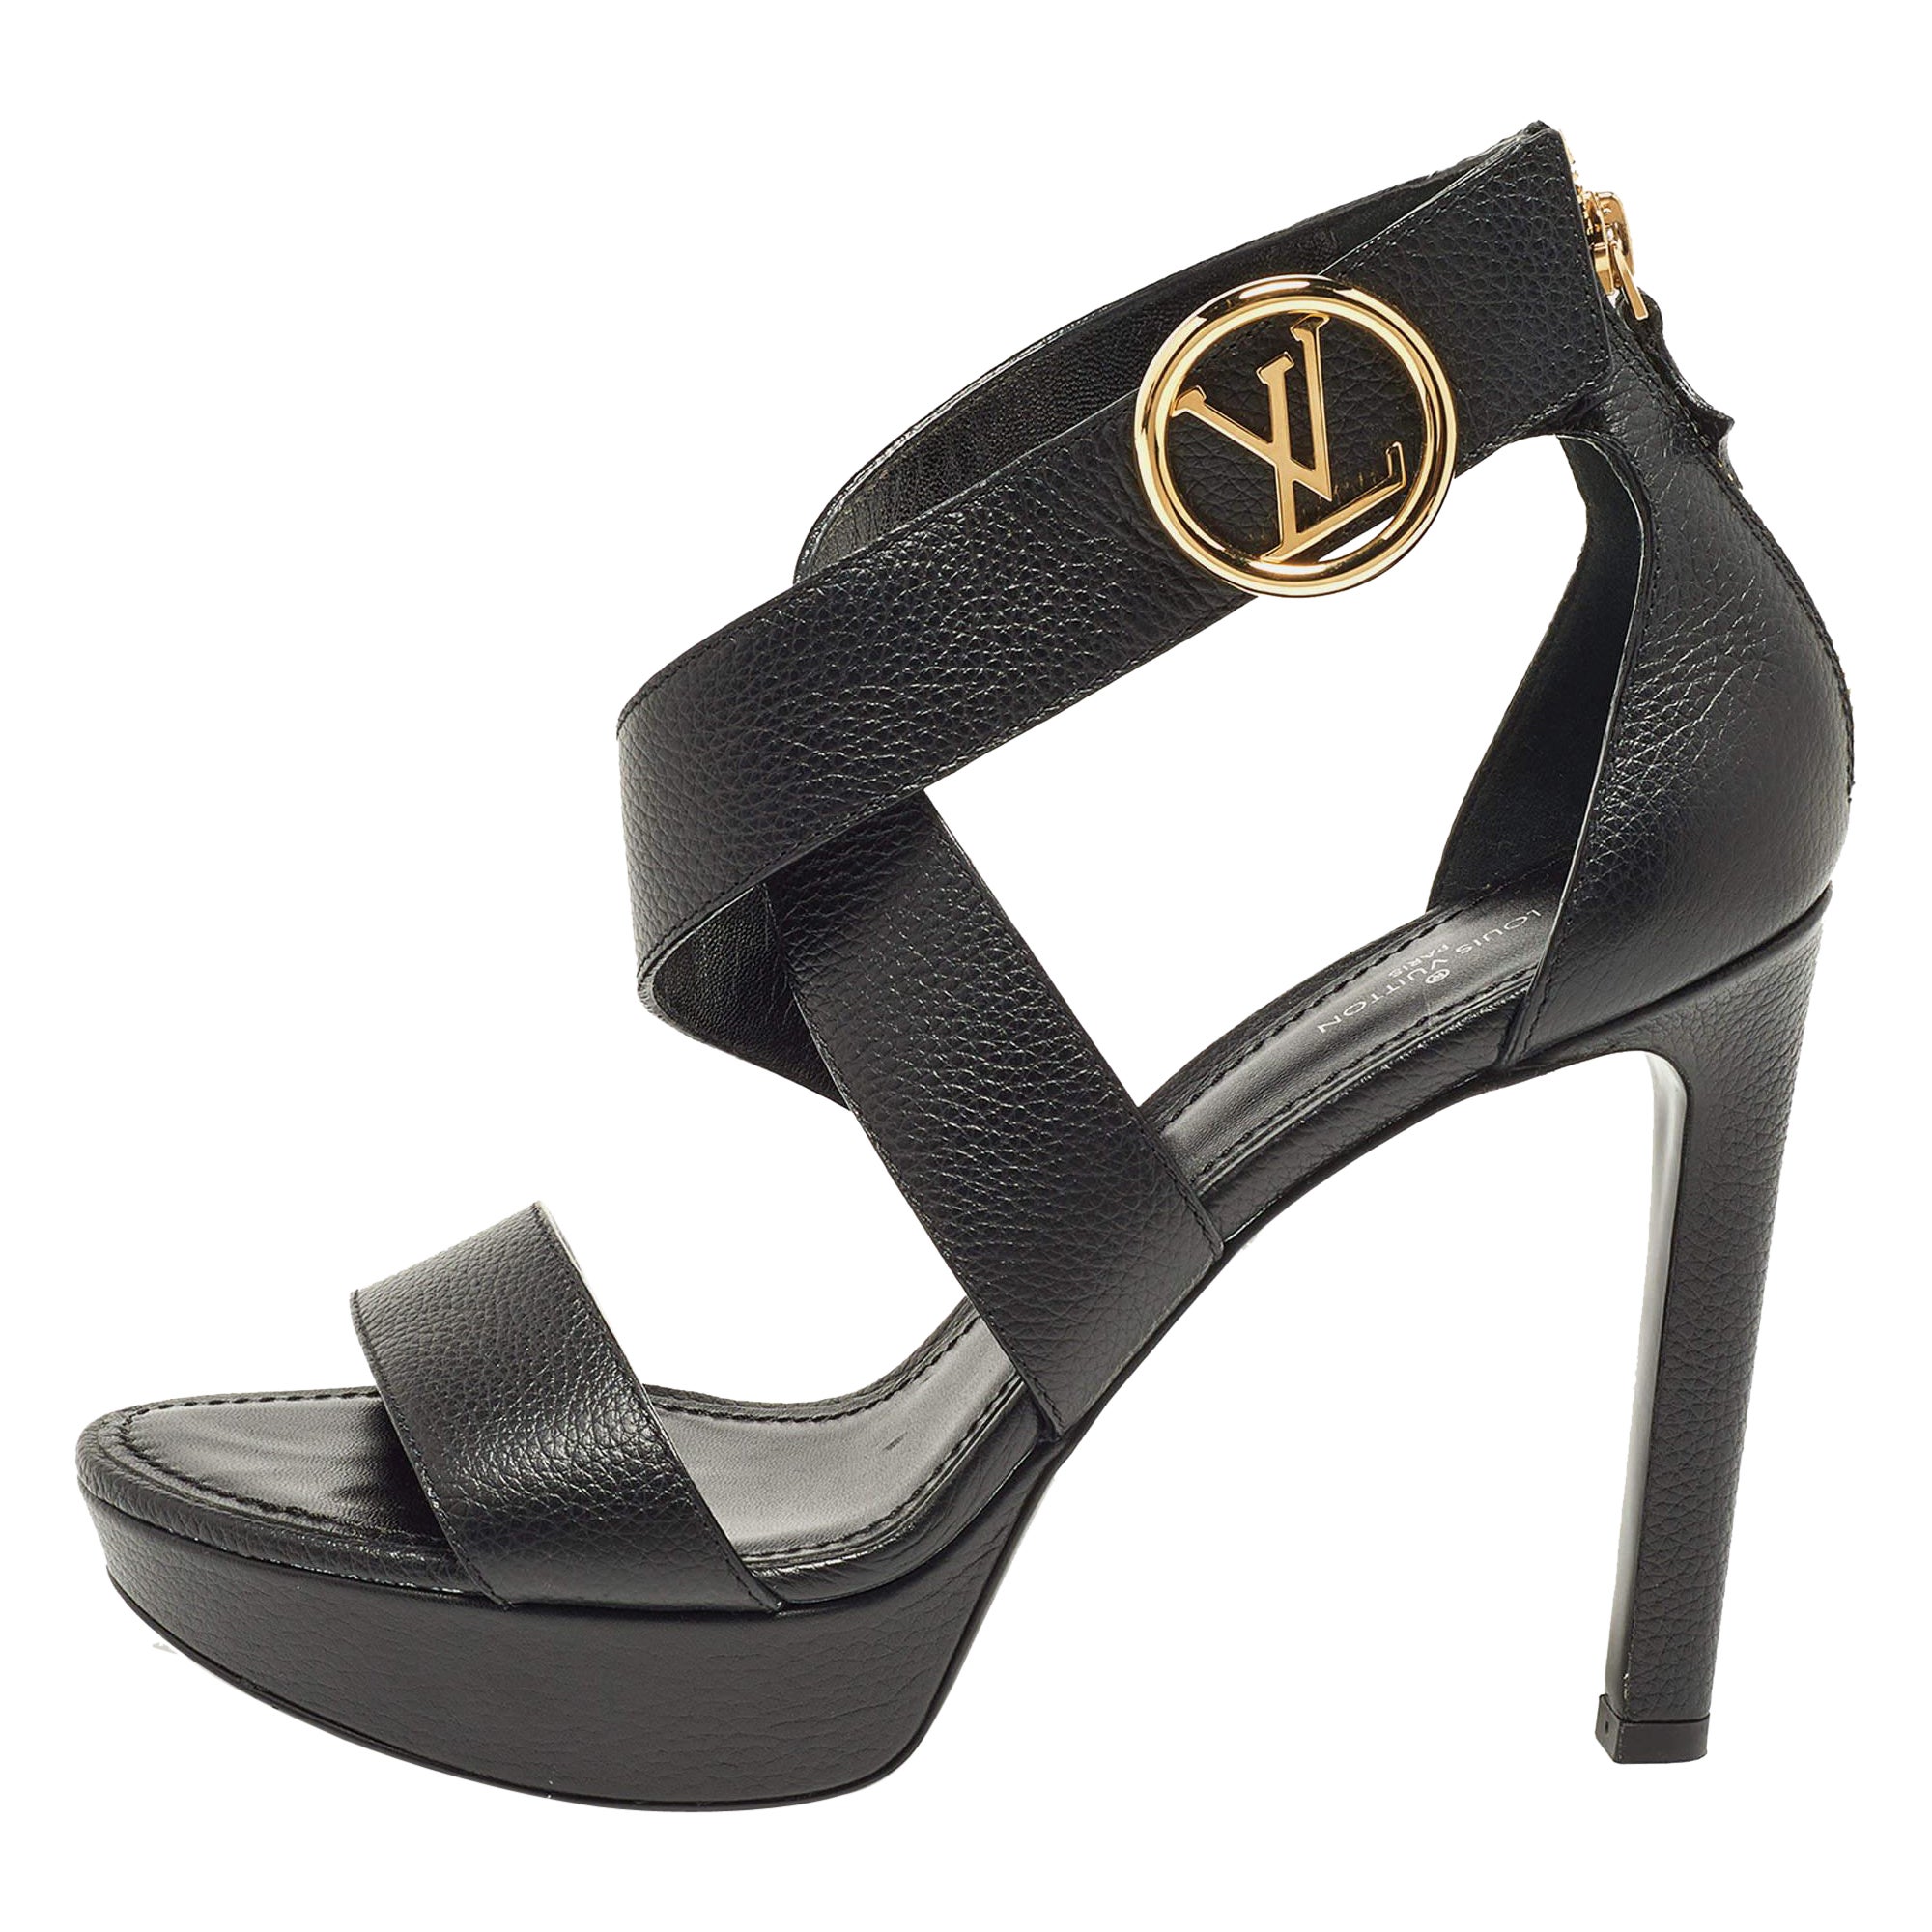 Louis Vuitton monogram flat sandals - 39 - 2010s second hand